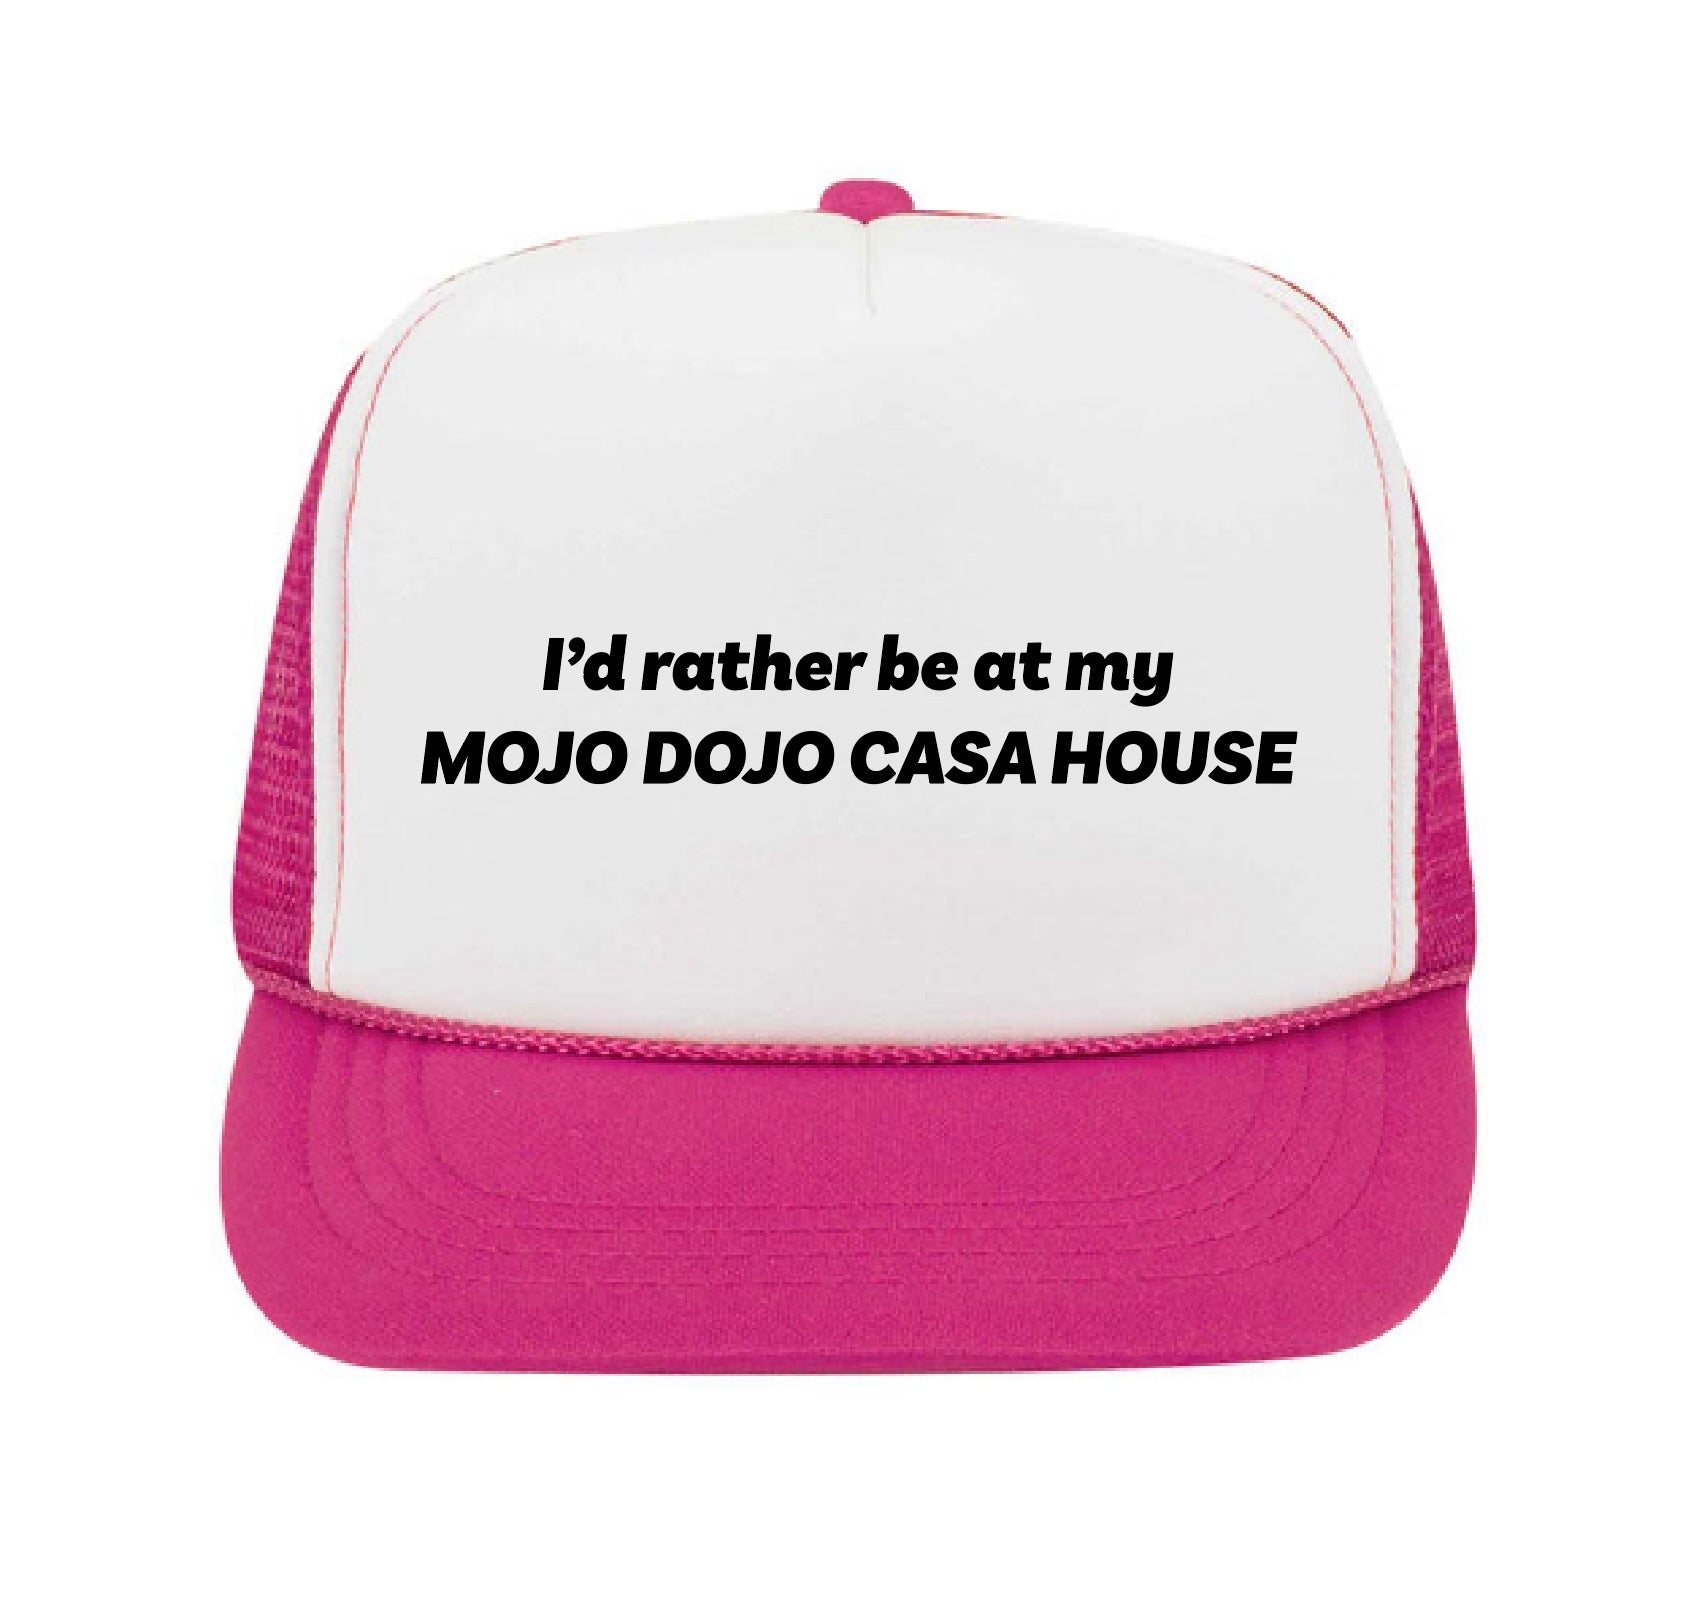 MOJO DOJO CASA HOUSE – Rad Hat Society